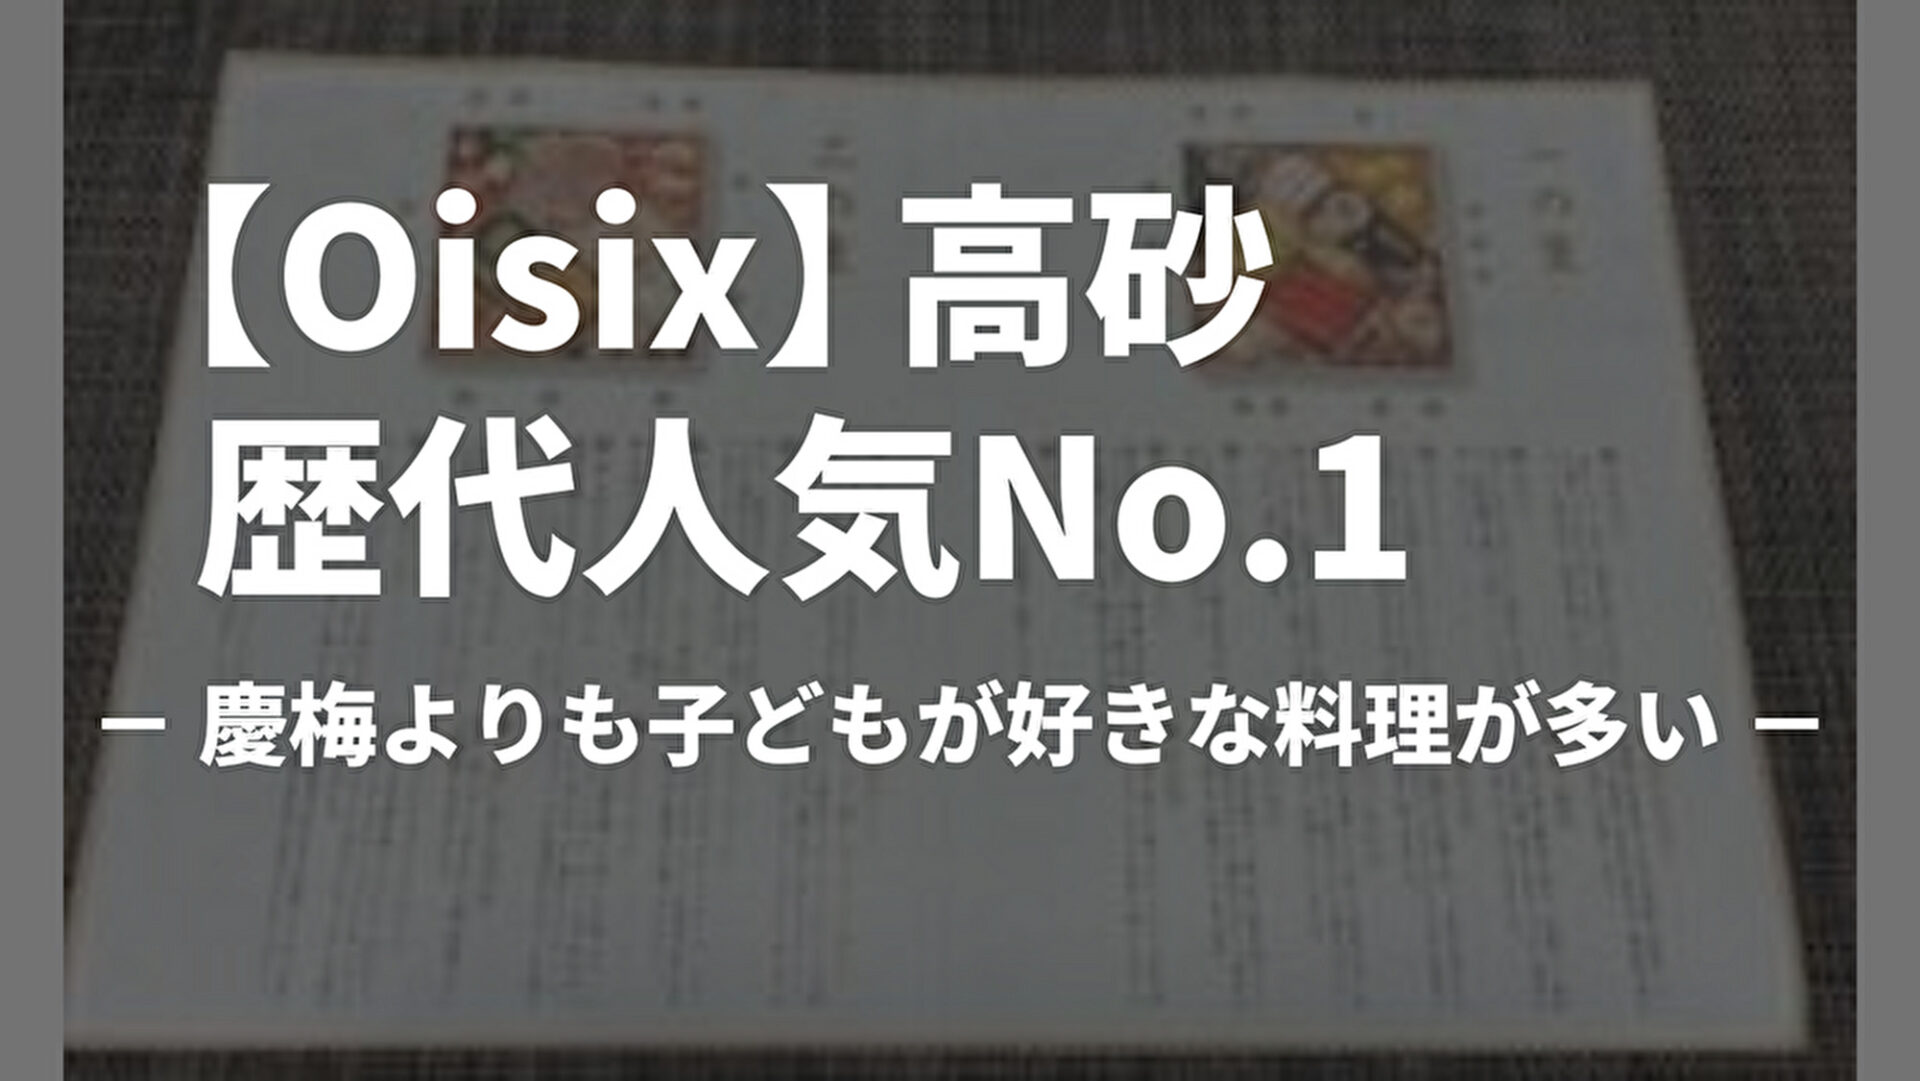 oisixおせち【高砂】は歴代人気No.1おせちで慶梅よりも子どもが好きな料理が多い。